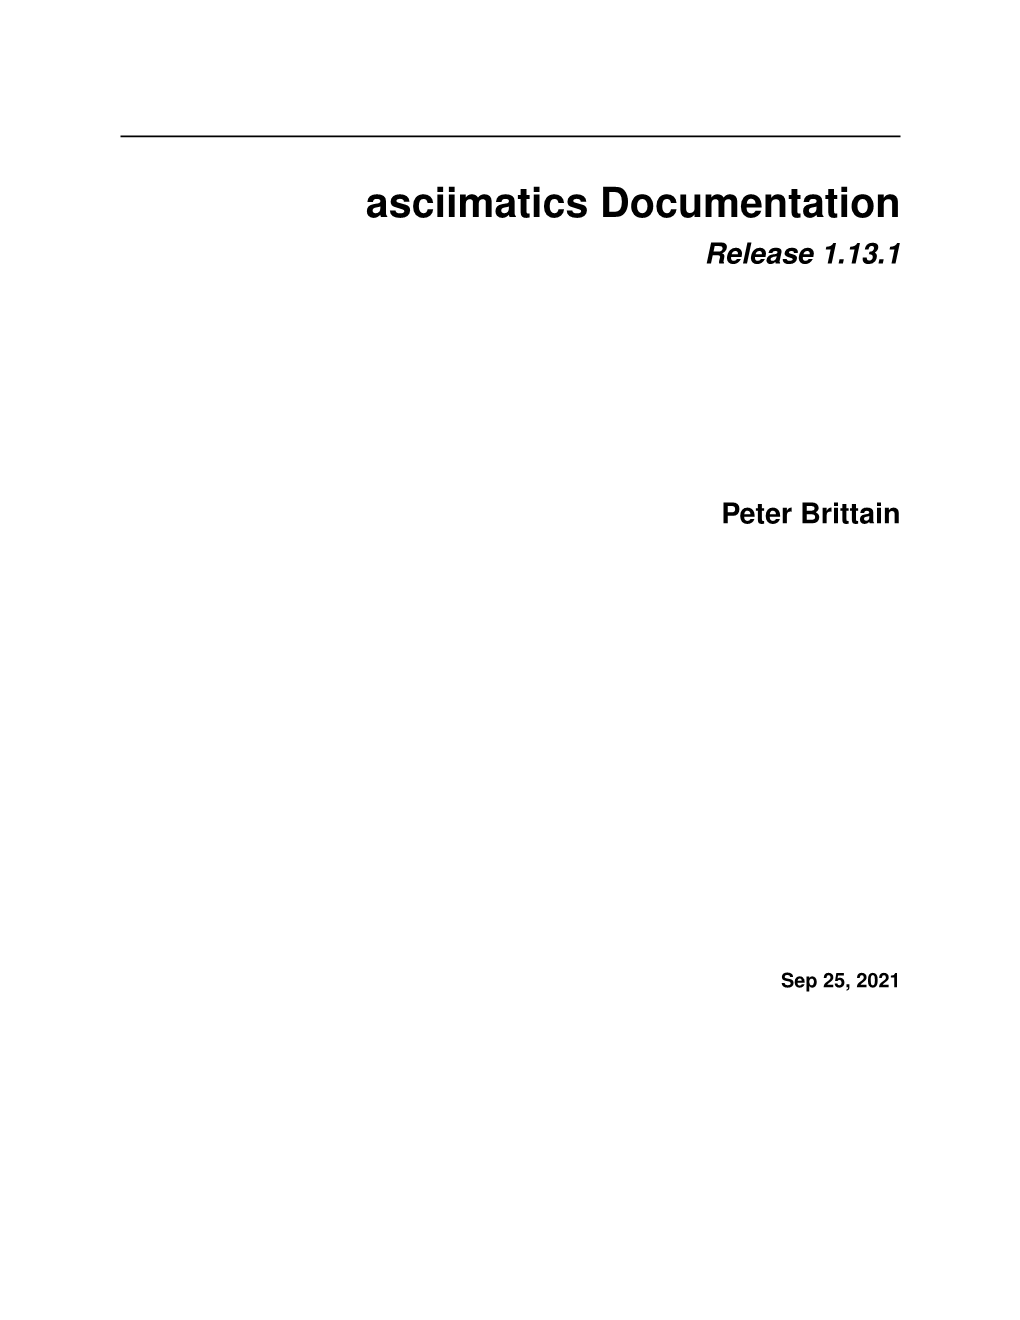 Asciimatics Documentation Release 1.13.1